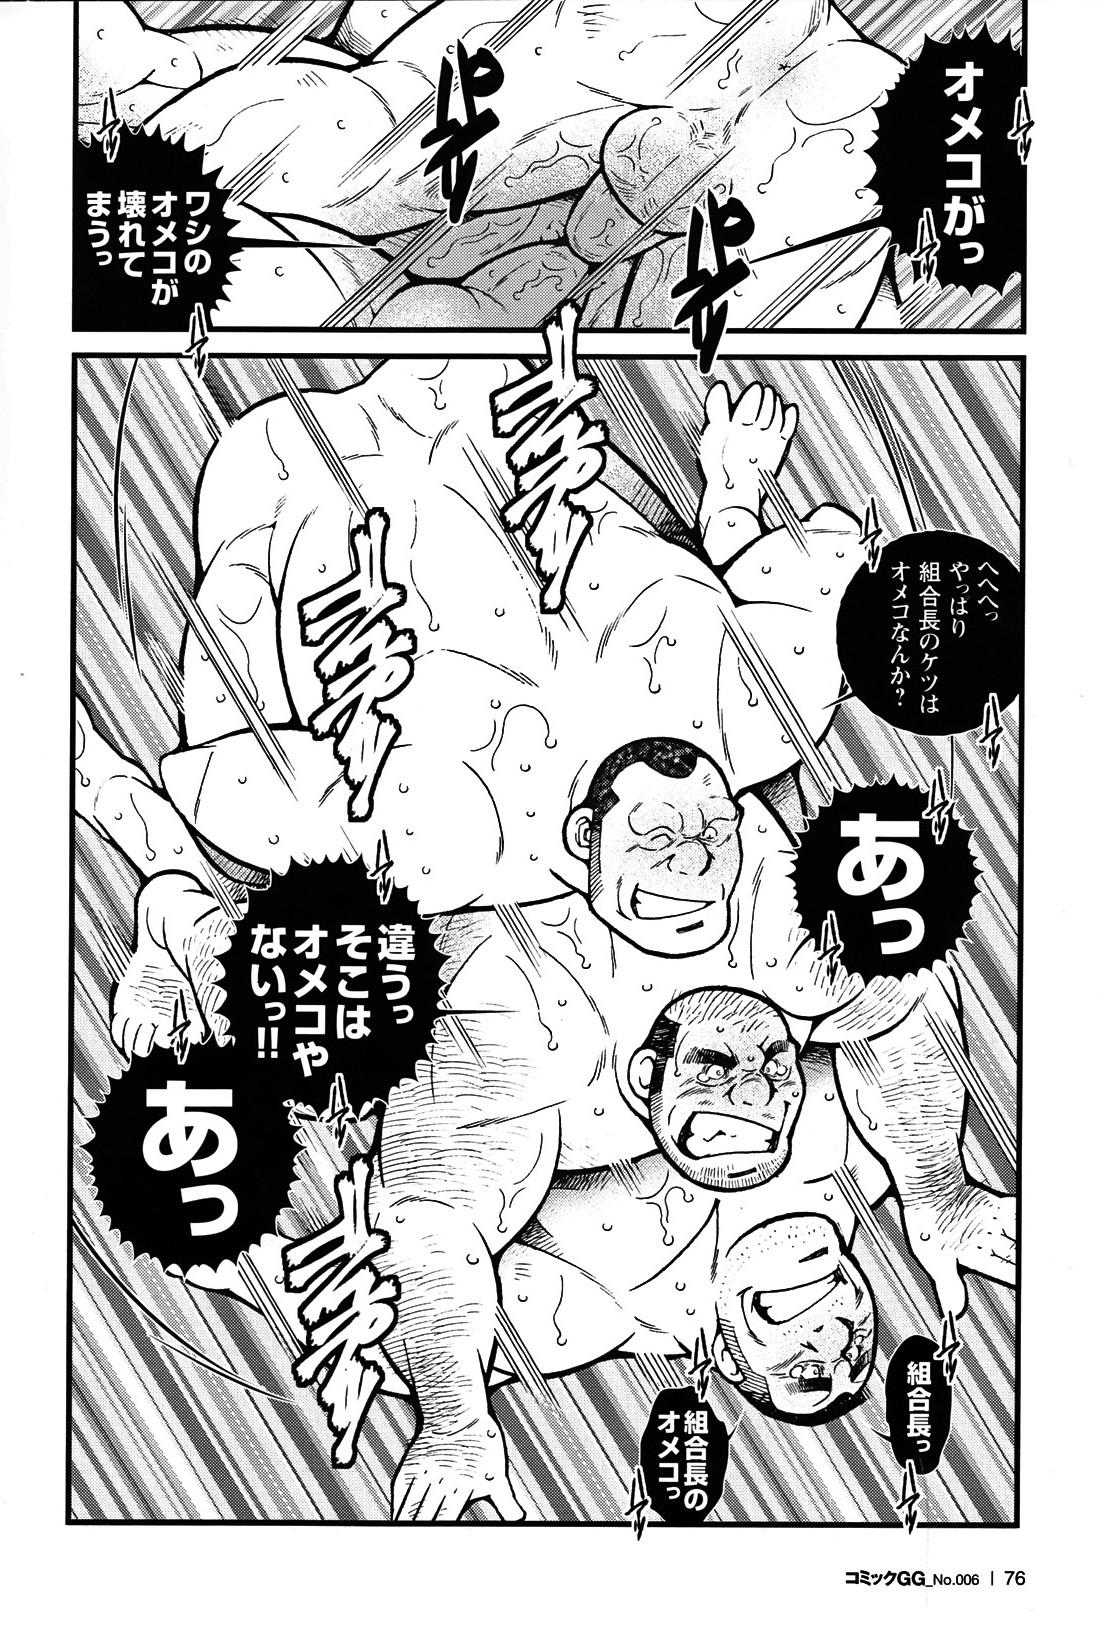 Comic G-men Gaho No. 06 Nikutai Roudousha 70